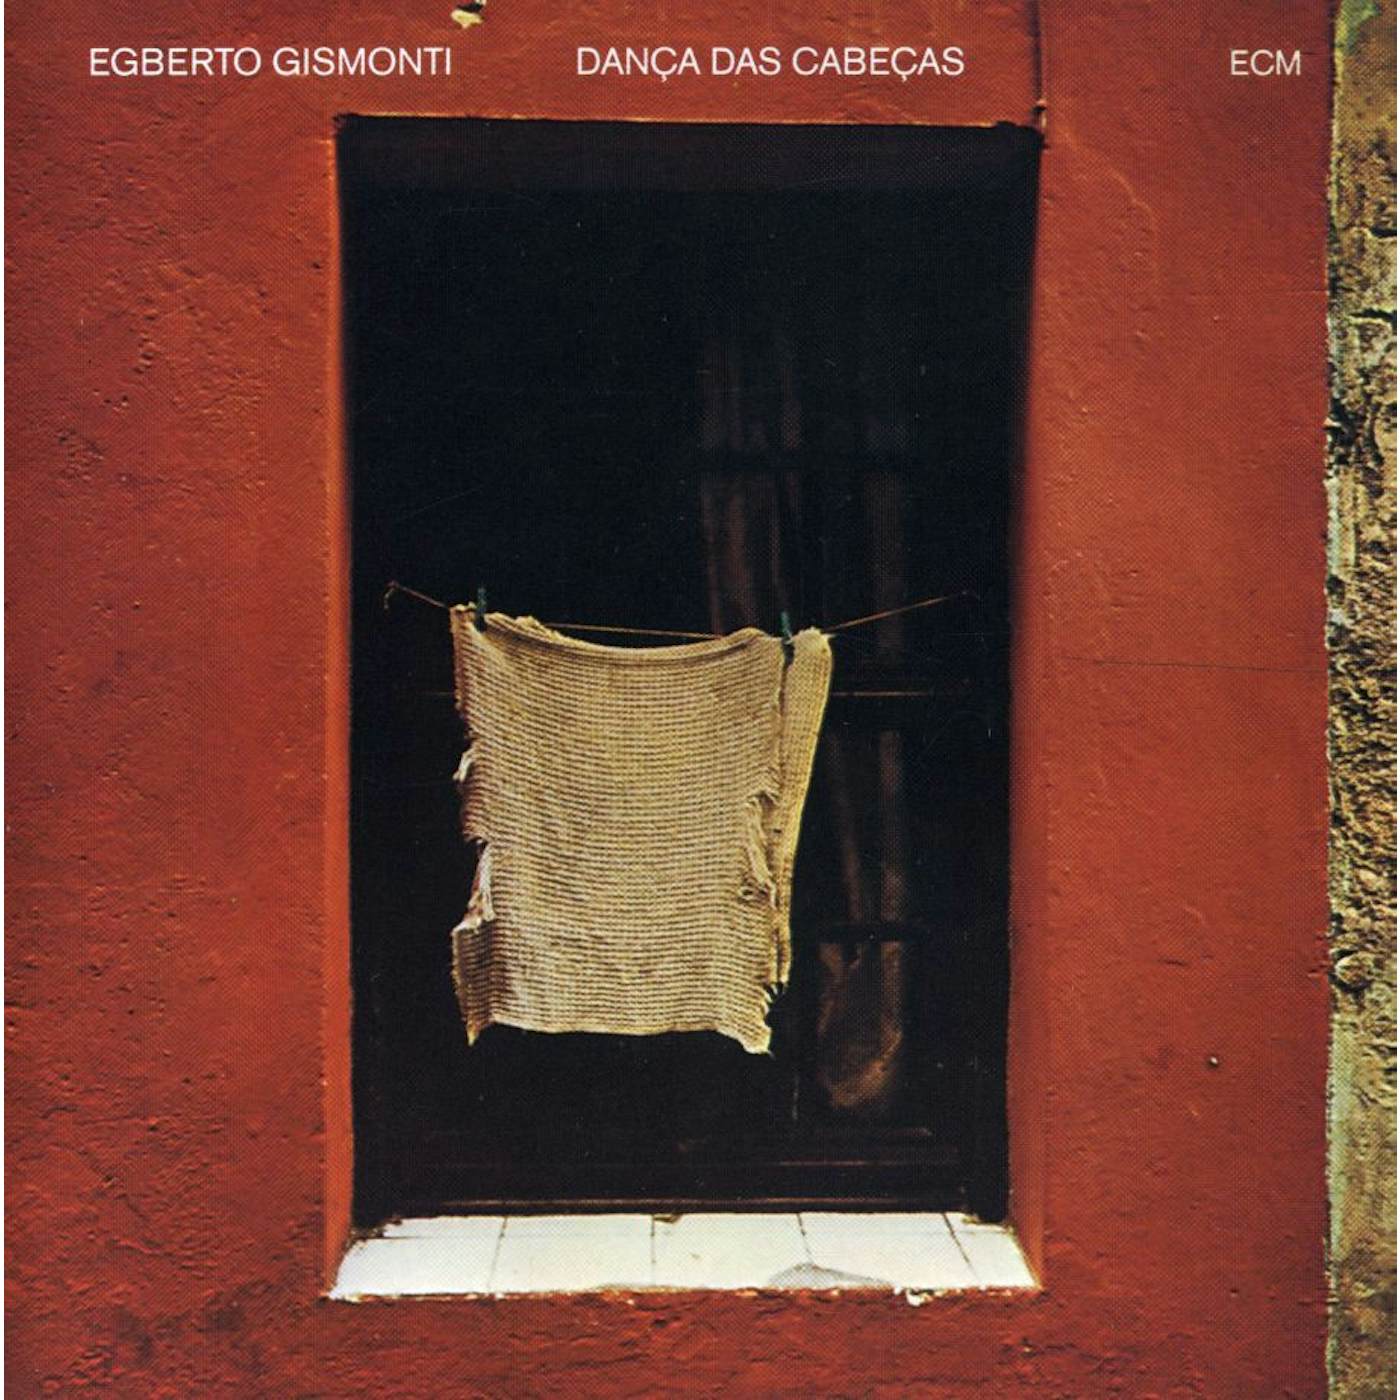 Egberto Gismonti DANCA DAS CABECAS CD